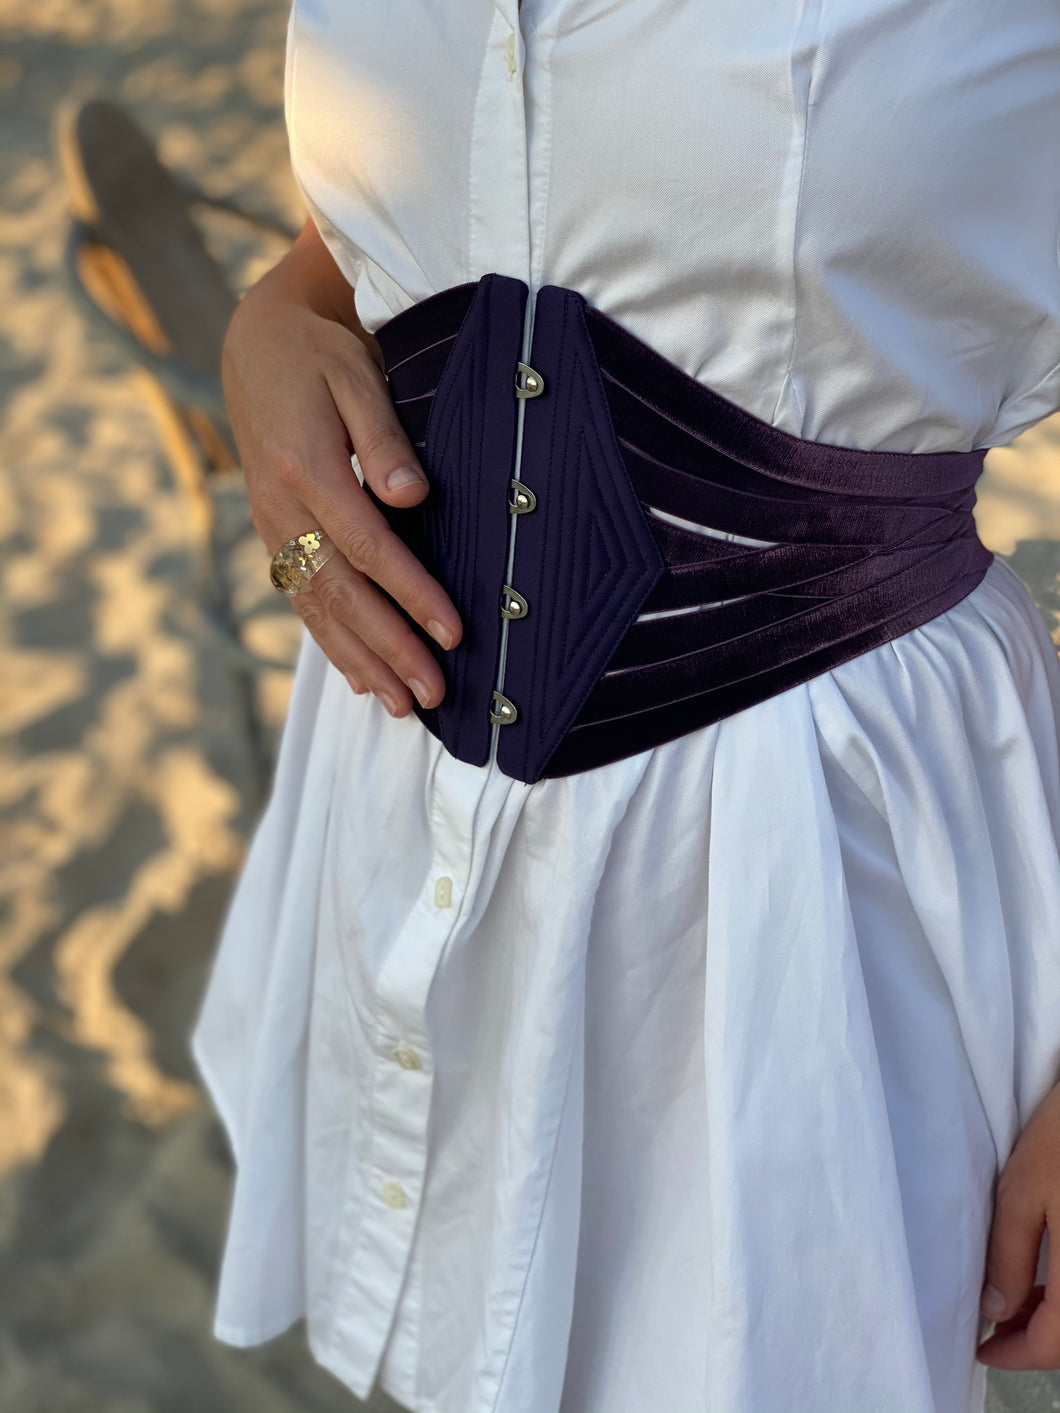 Midnight purple velvet corset – Exclusive Corsets